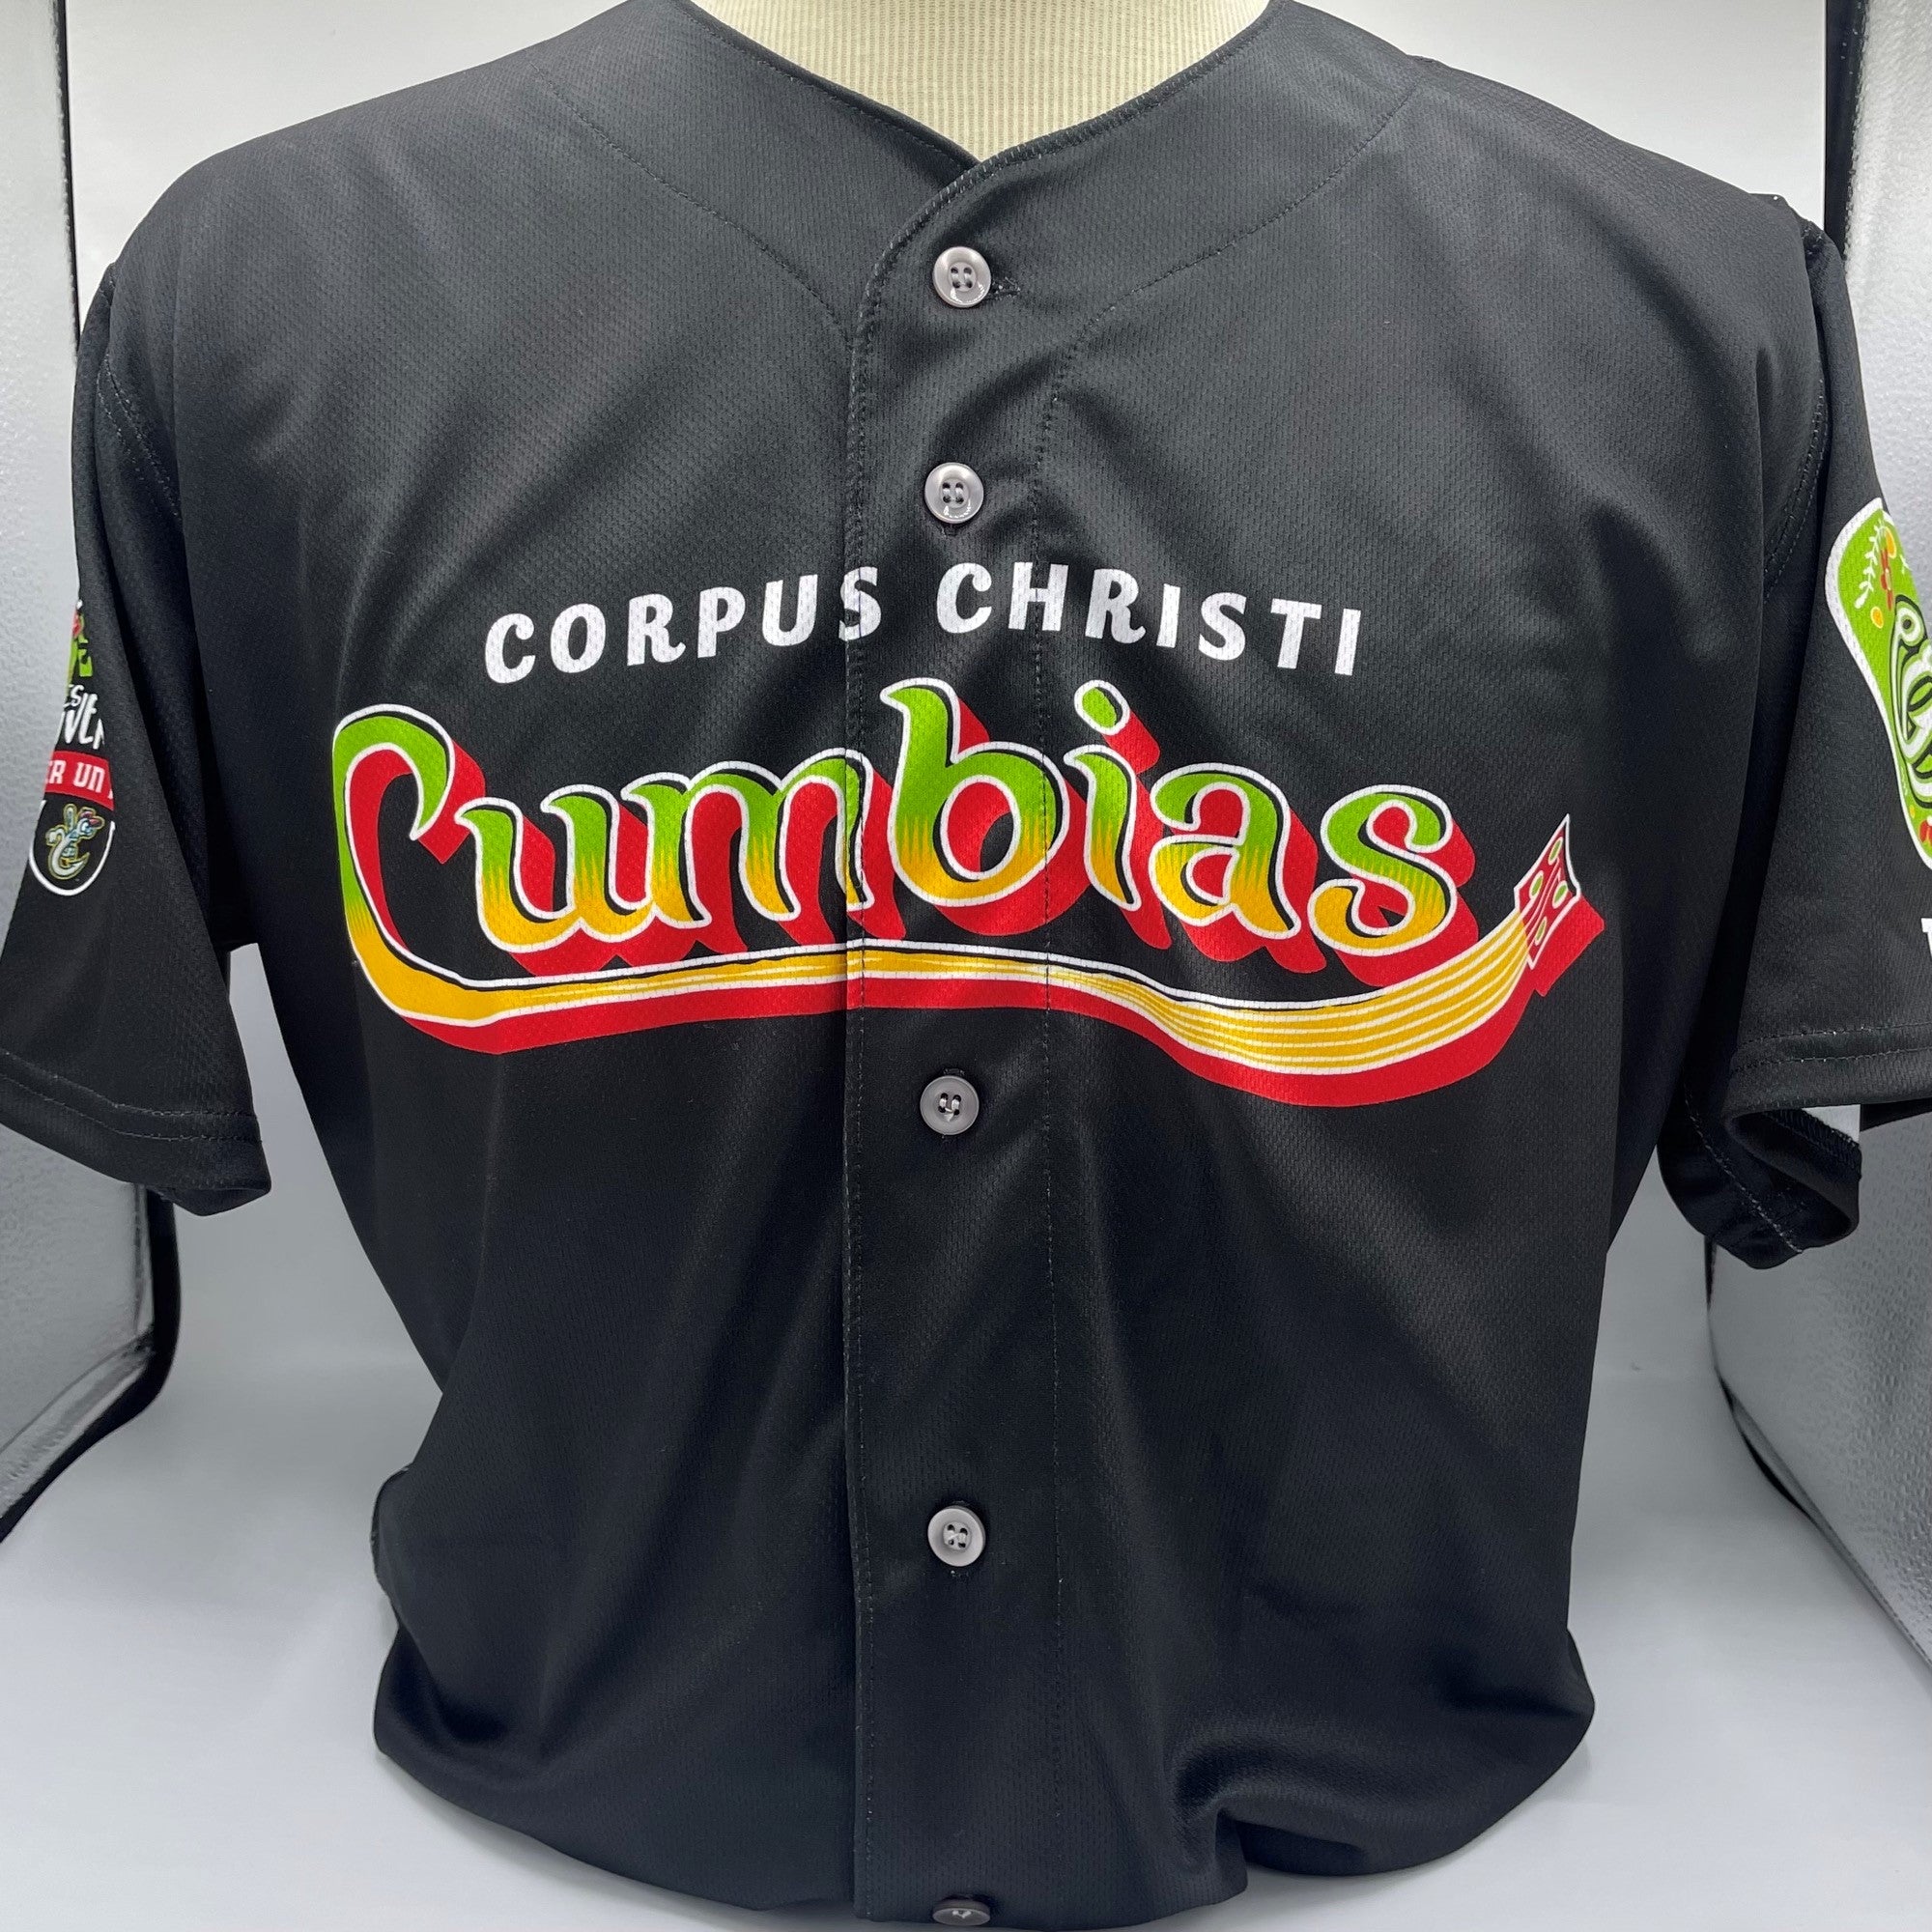 2017 Corpus Christi Hooks uniforms - Uniforms - MVP Mods